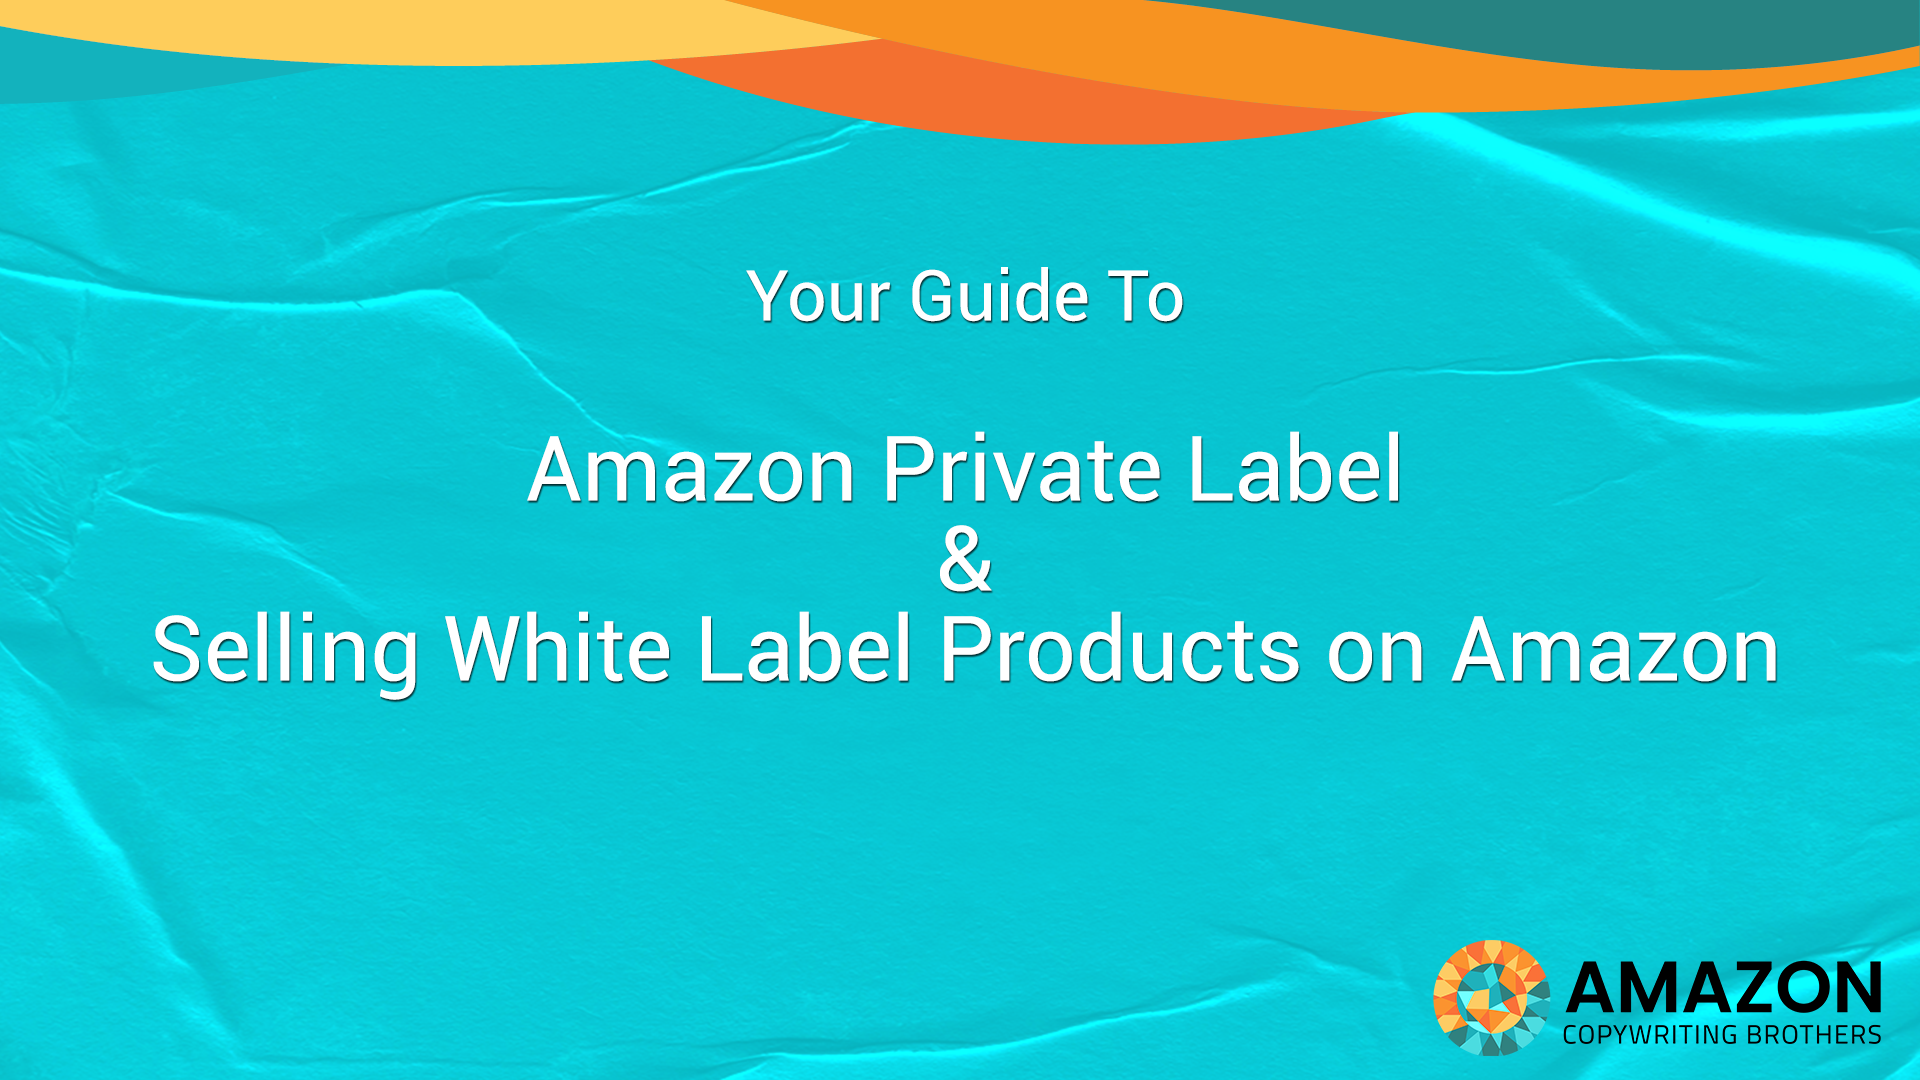 Amazon Private Label Guide - Amazon Copywriting Brothers